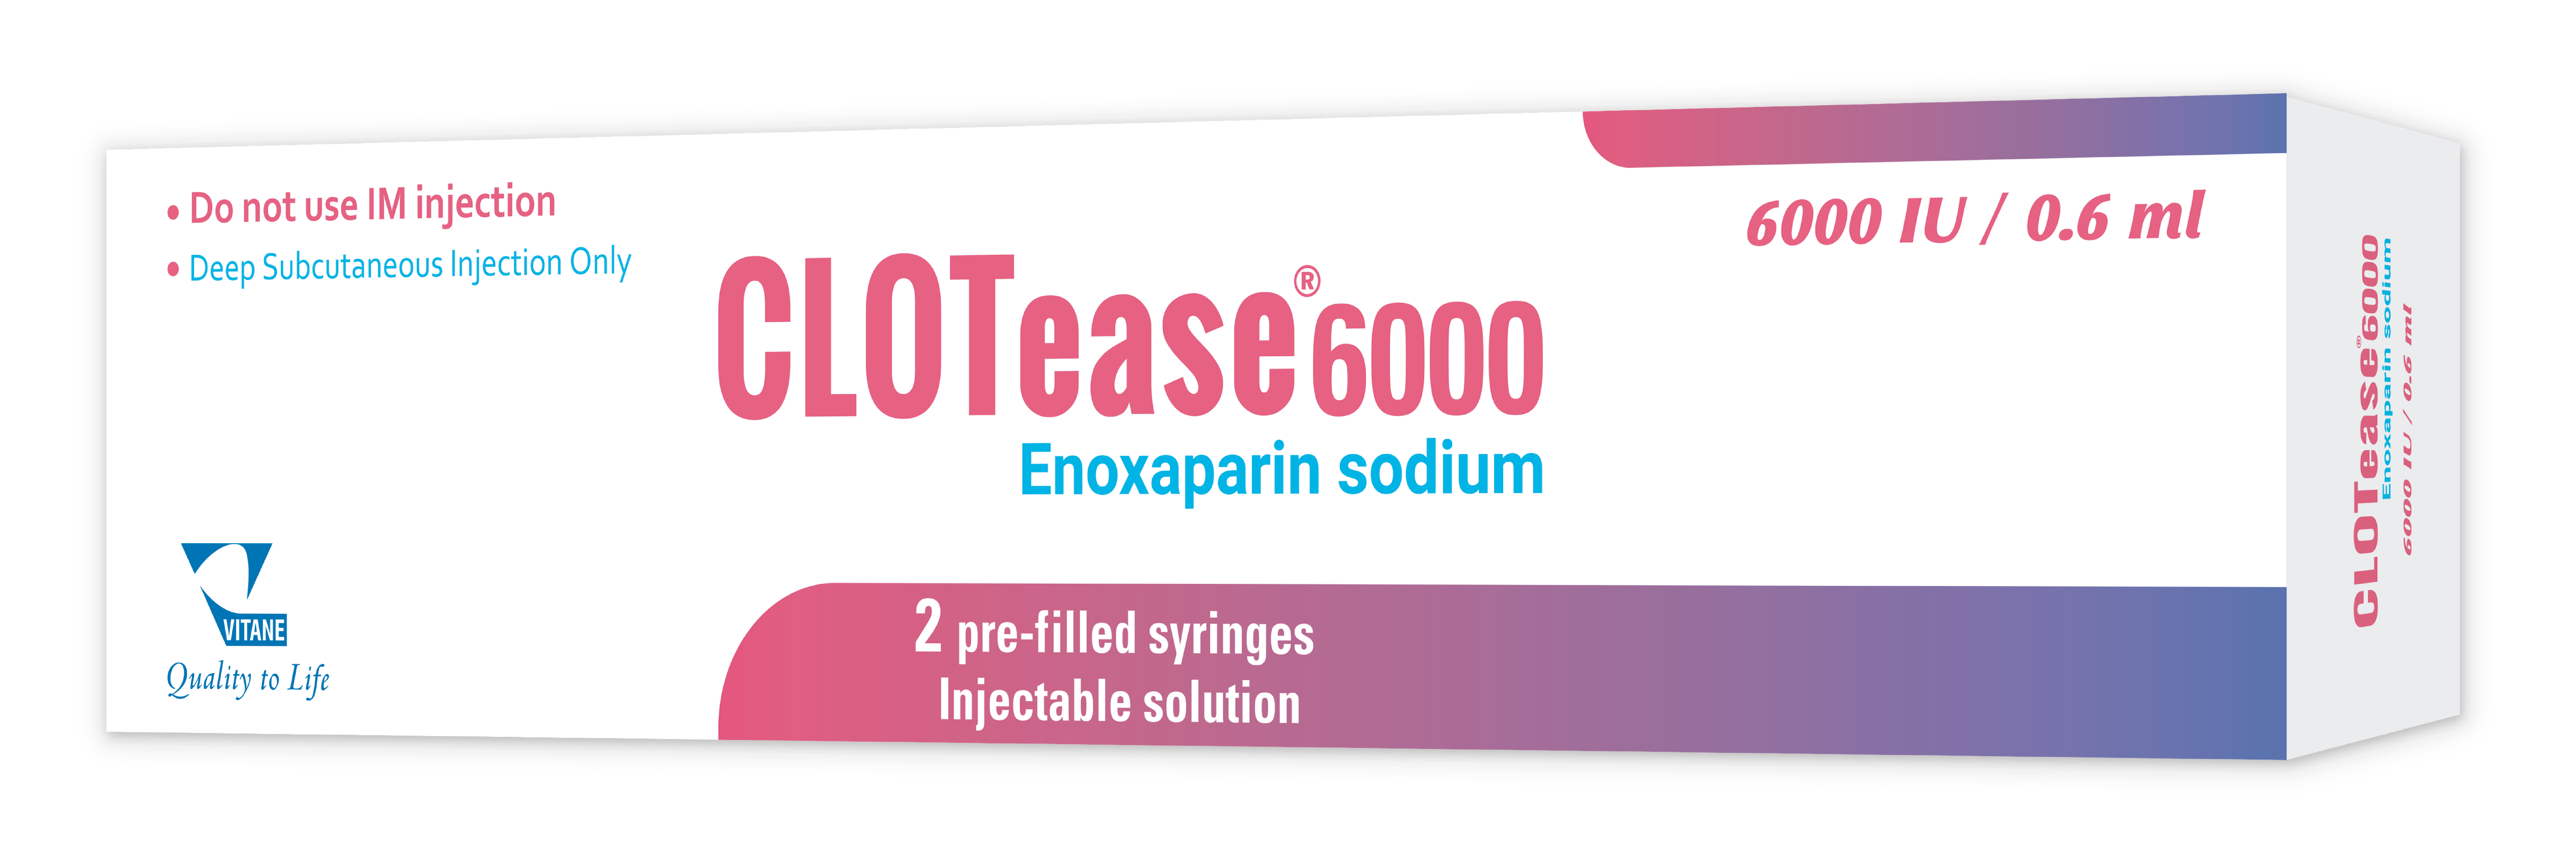 CLOTease 6000 - Enoxaparin Sodium 6000 IU / 0,6ml